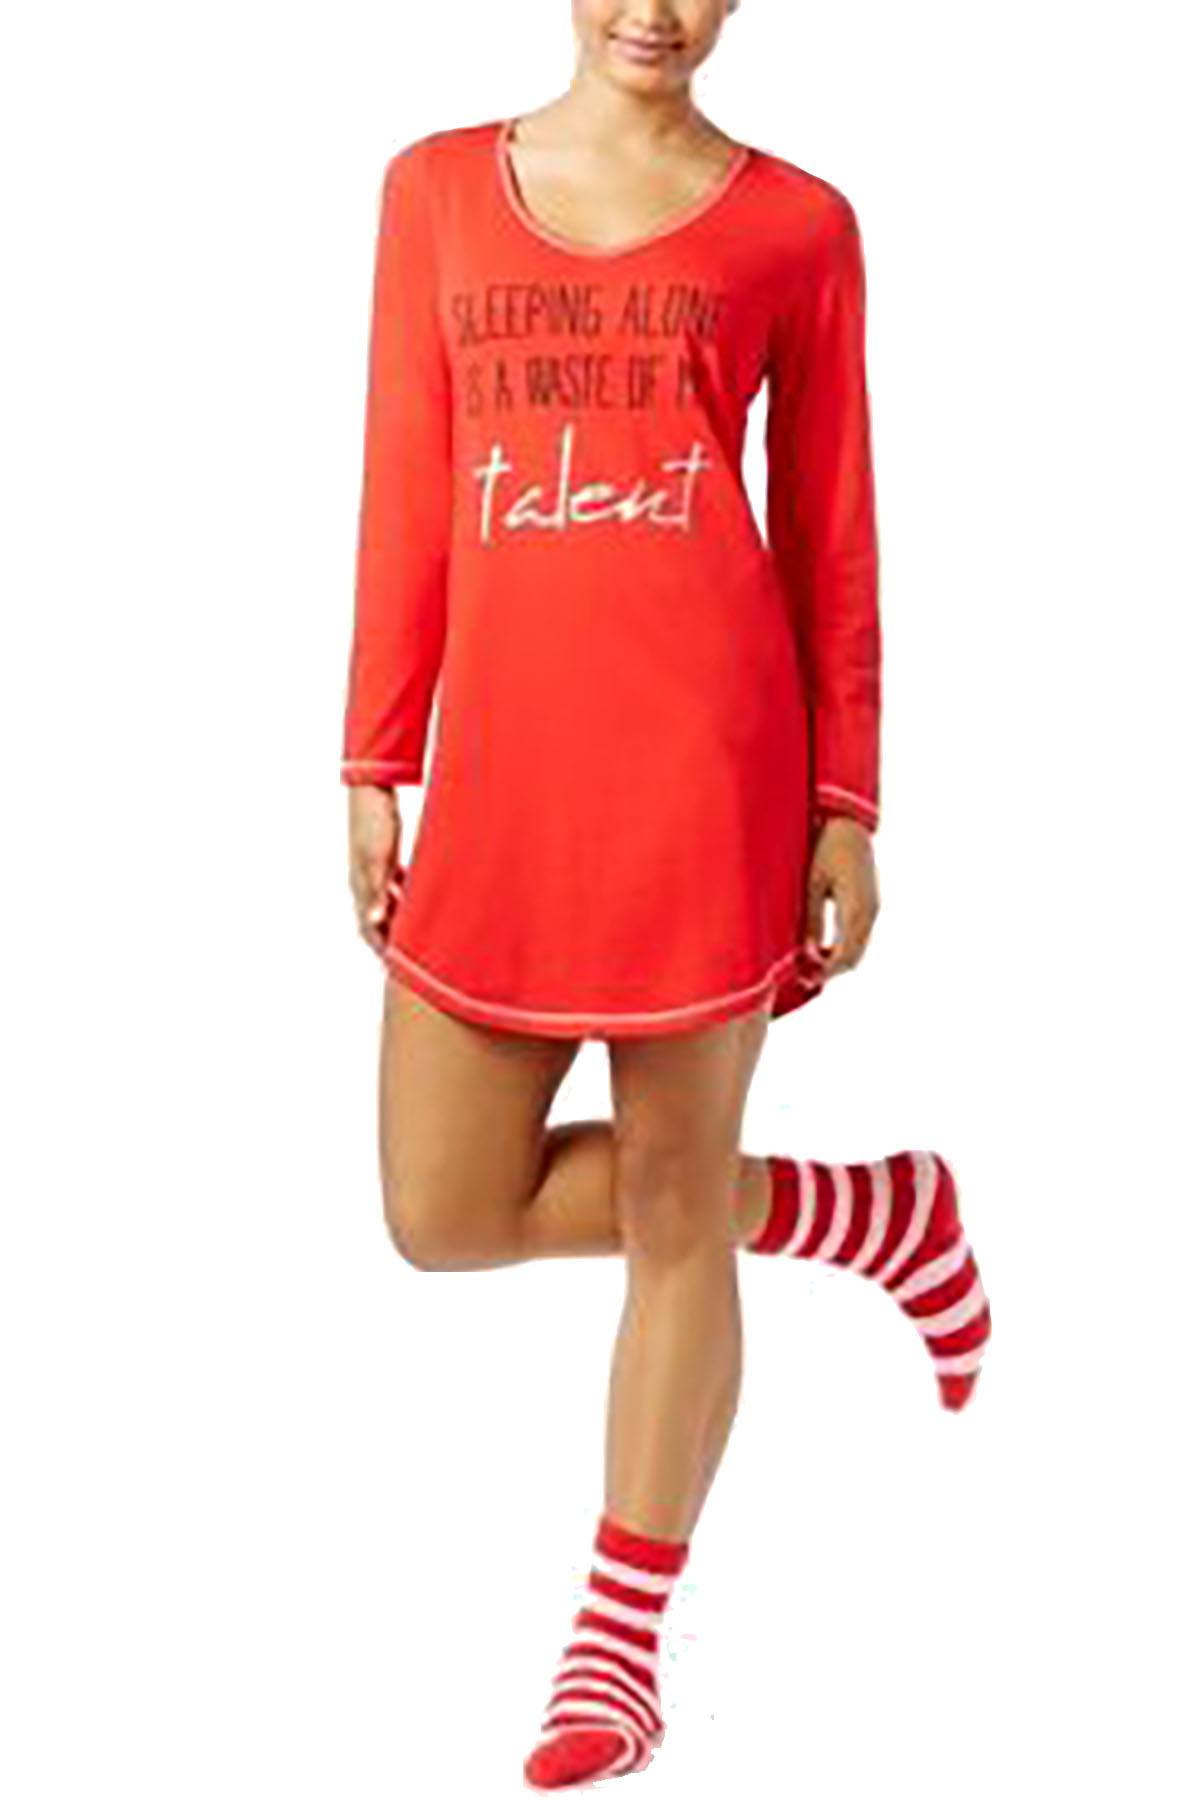 Jenni by Jennifer Moore Red Sleeping-Alone Graphic Sleepshirt and Socks Set